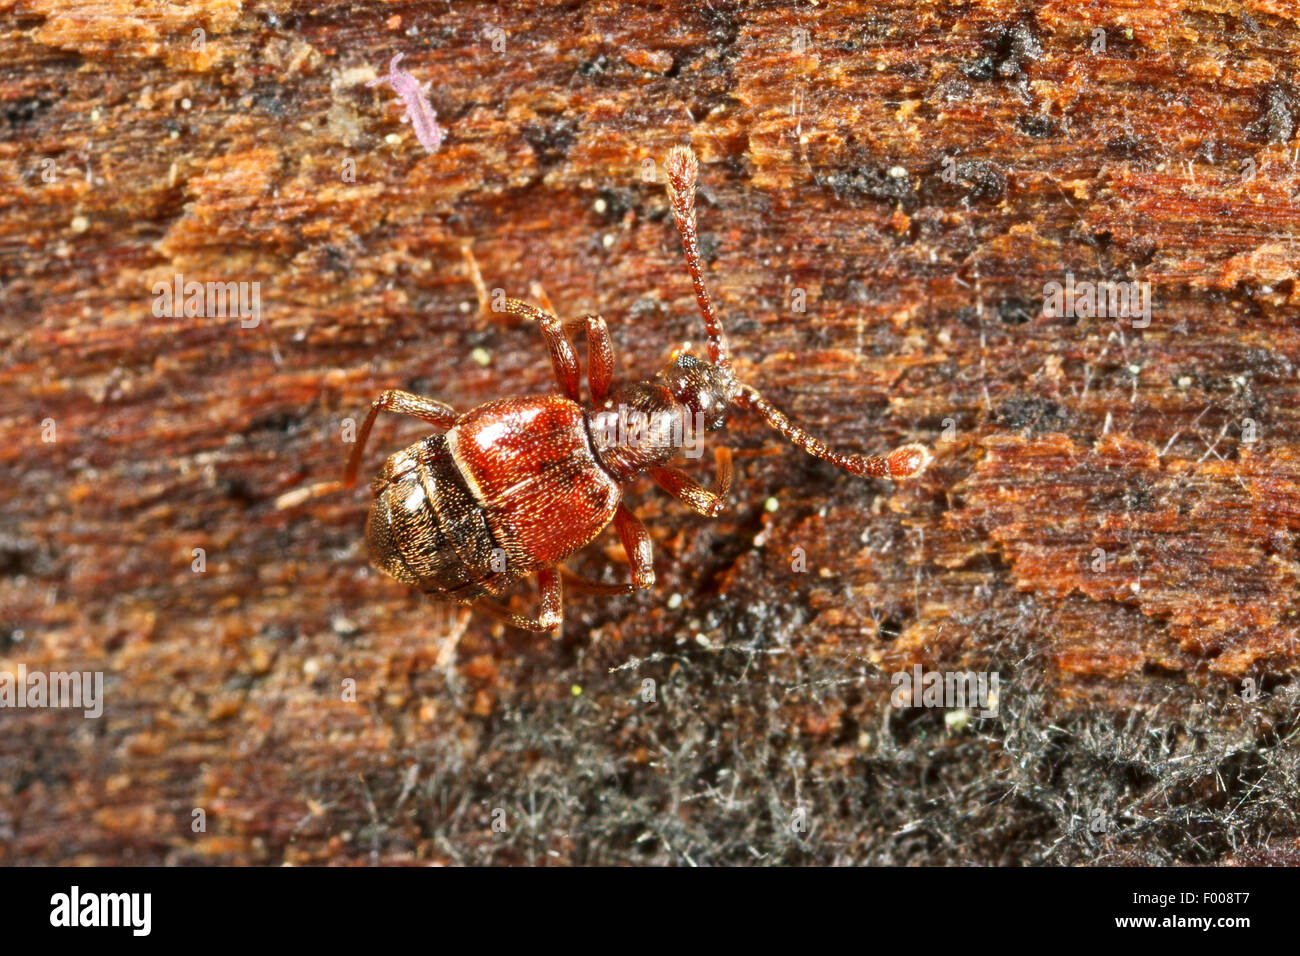 Short winged mold beetle (Tyrus mucronatus), on deadwood, Germany Stock Photo